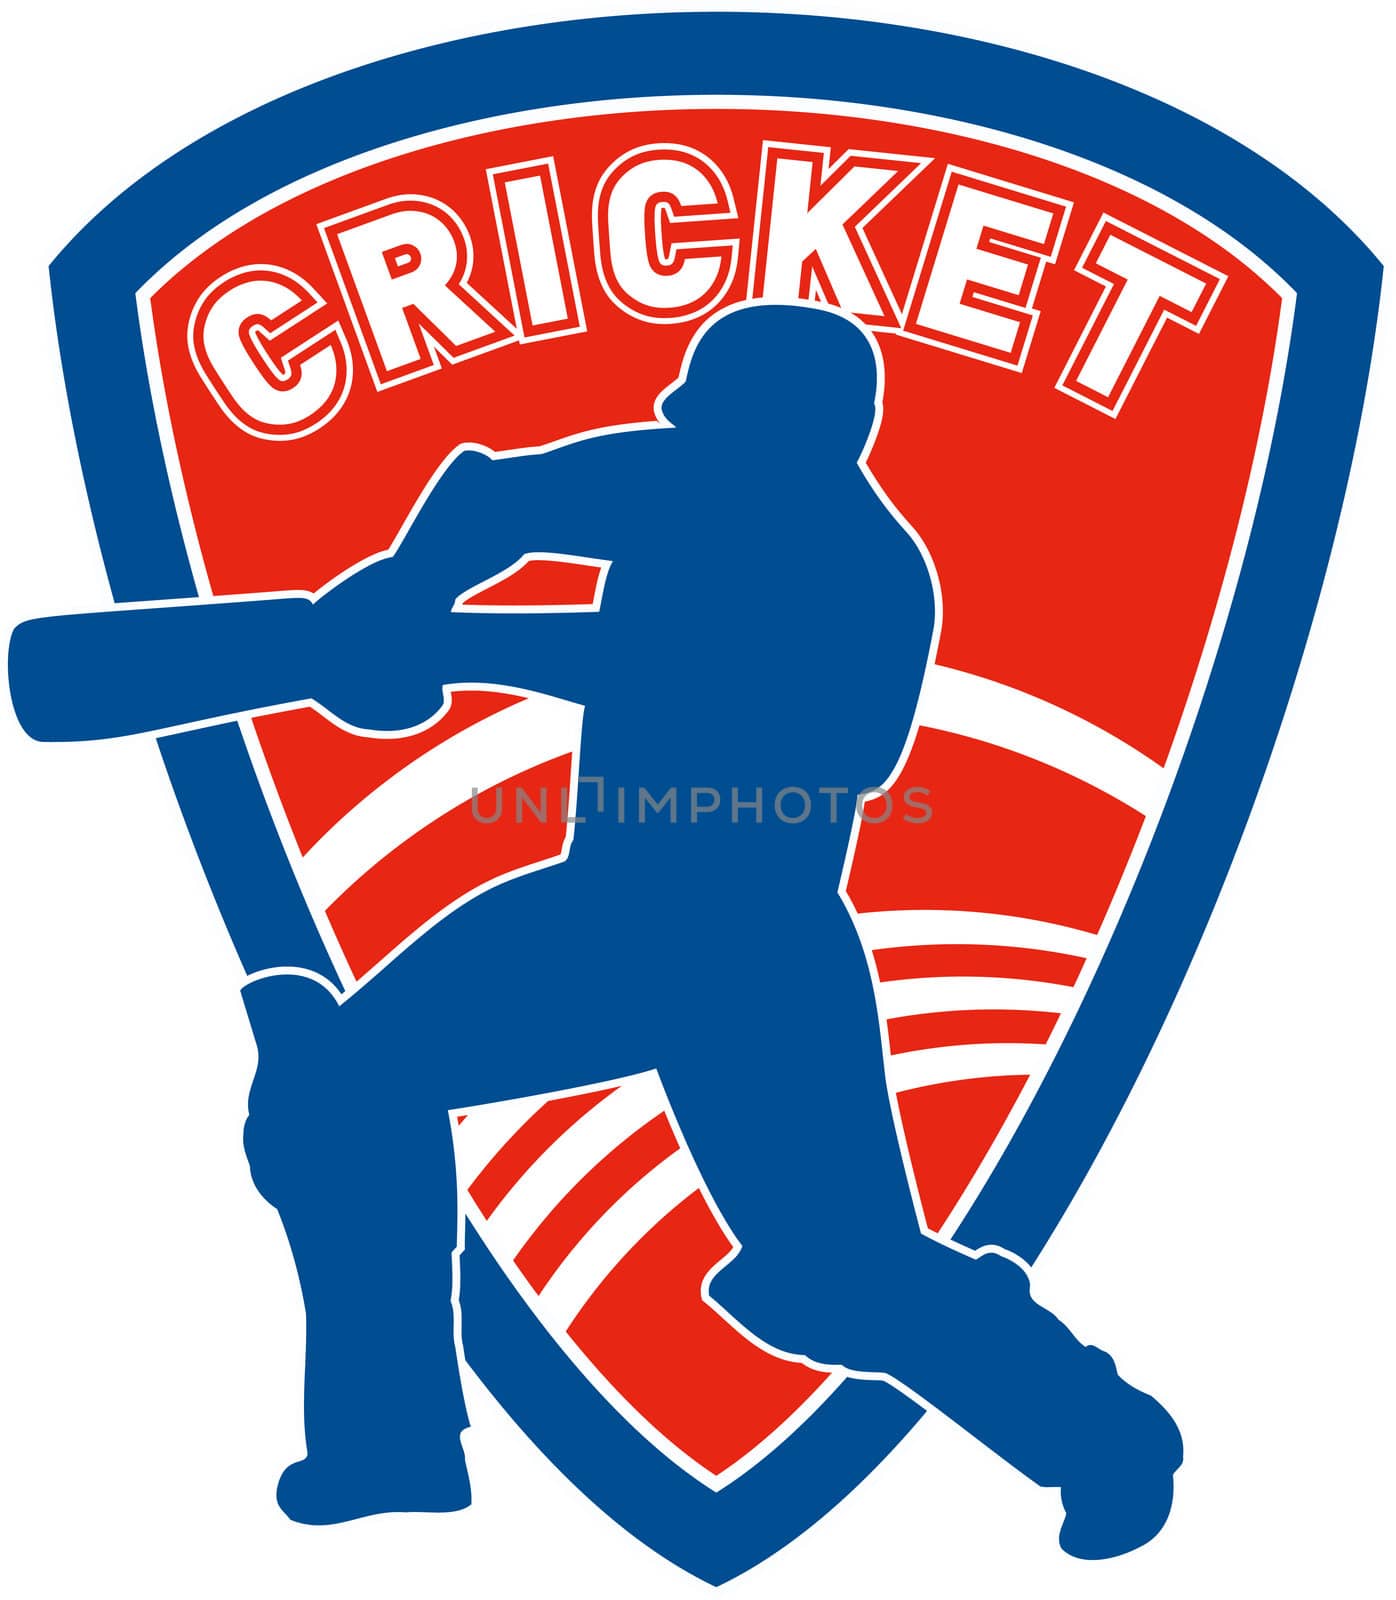 cricket player batsman batting shield by patrimonio